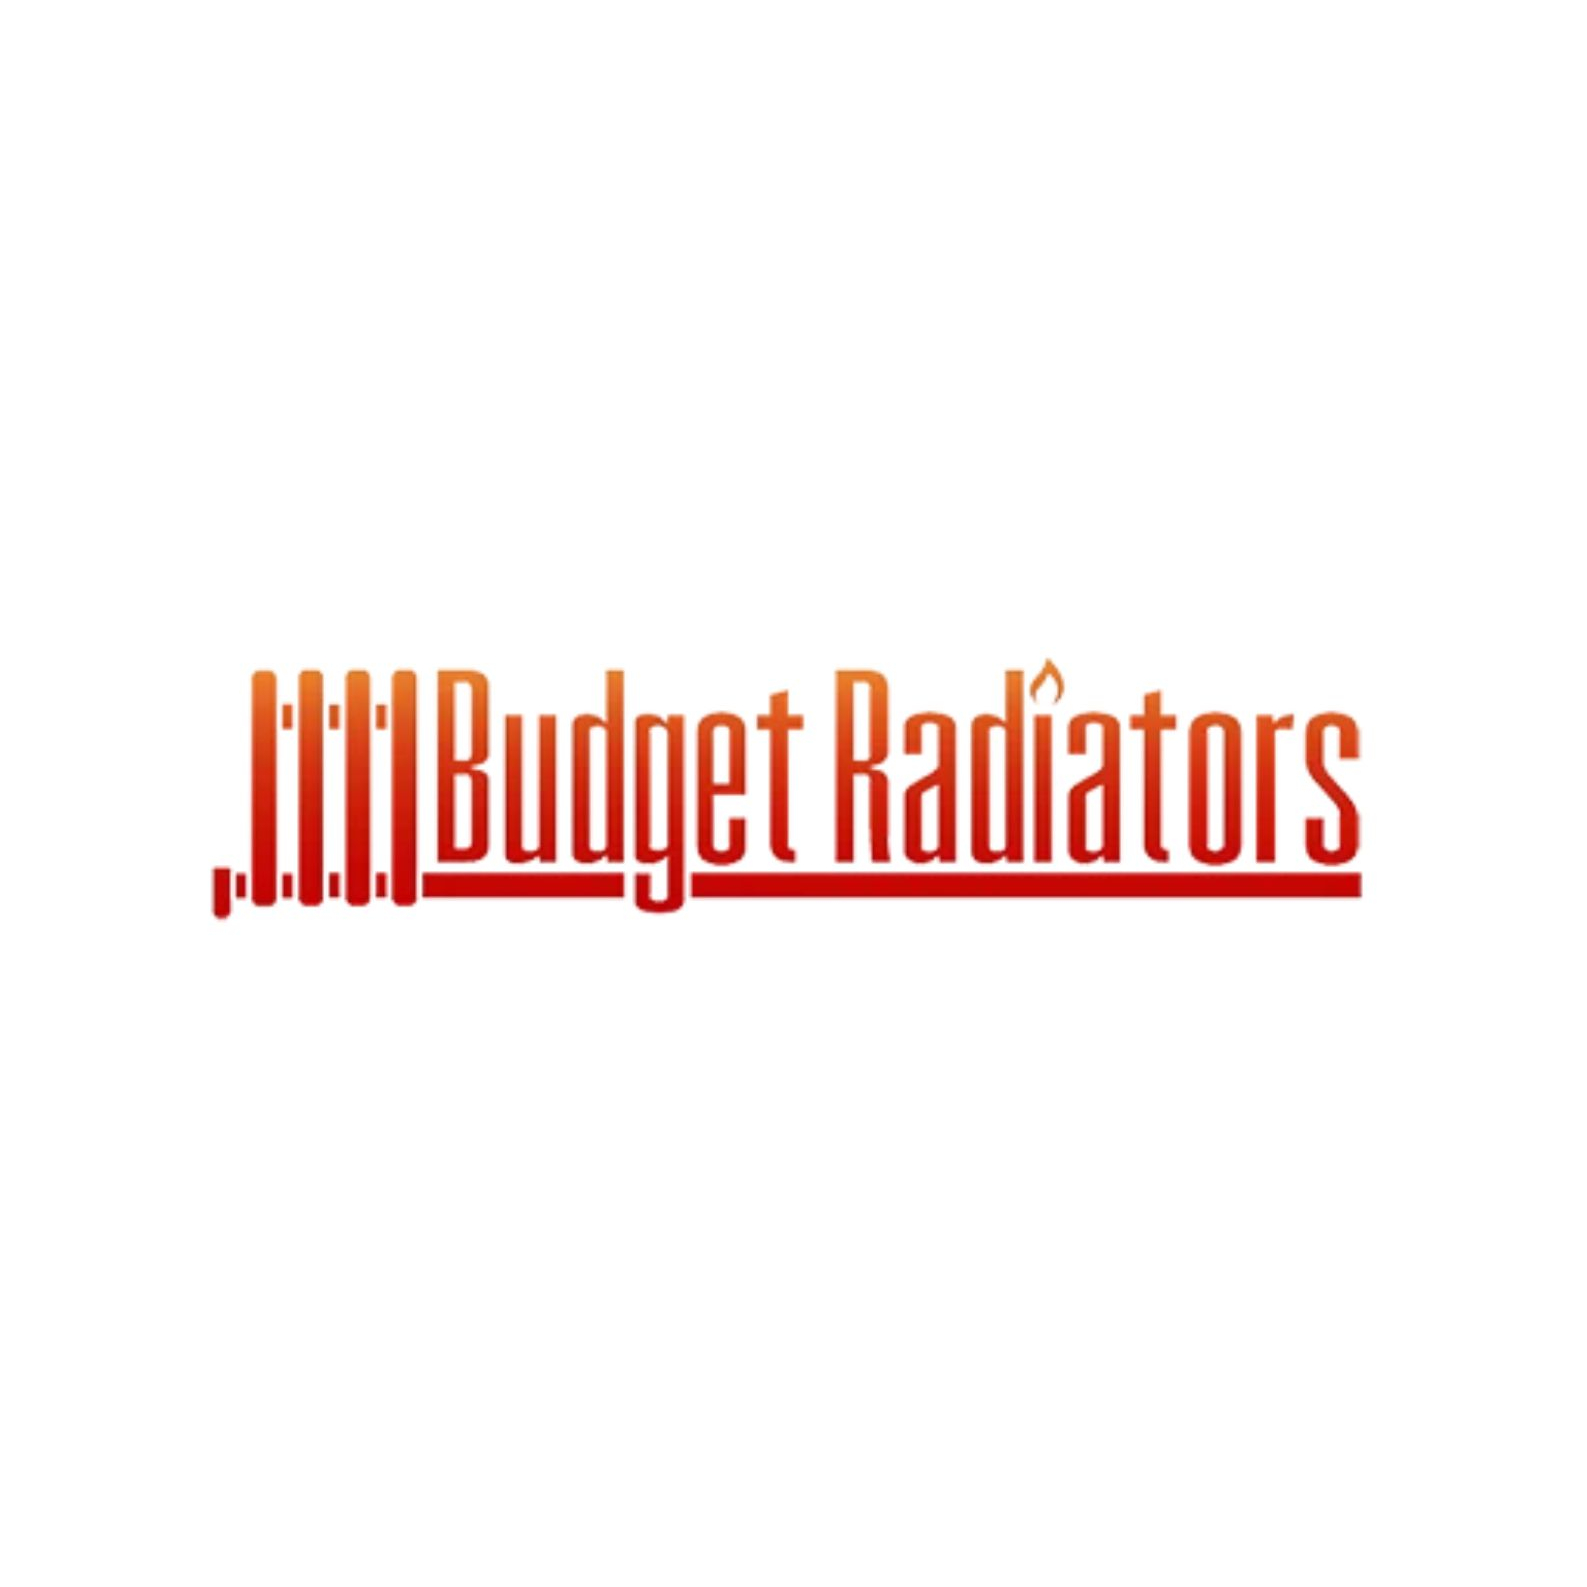 budgetradiators